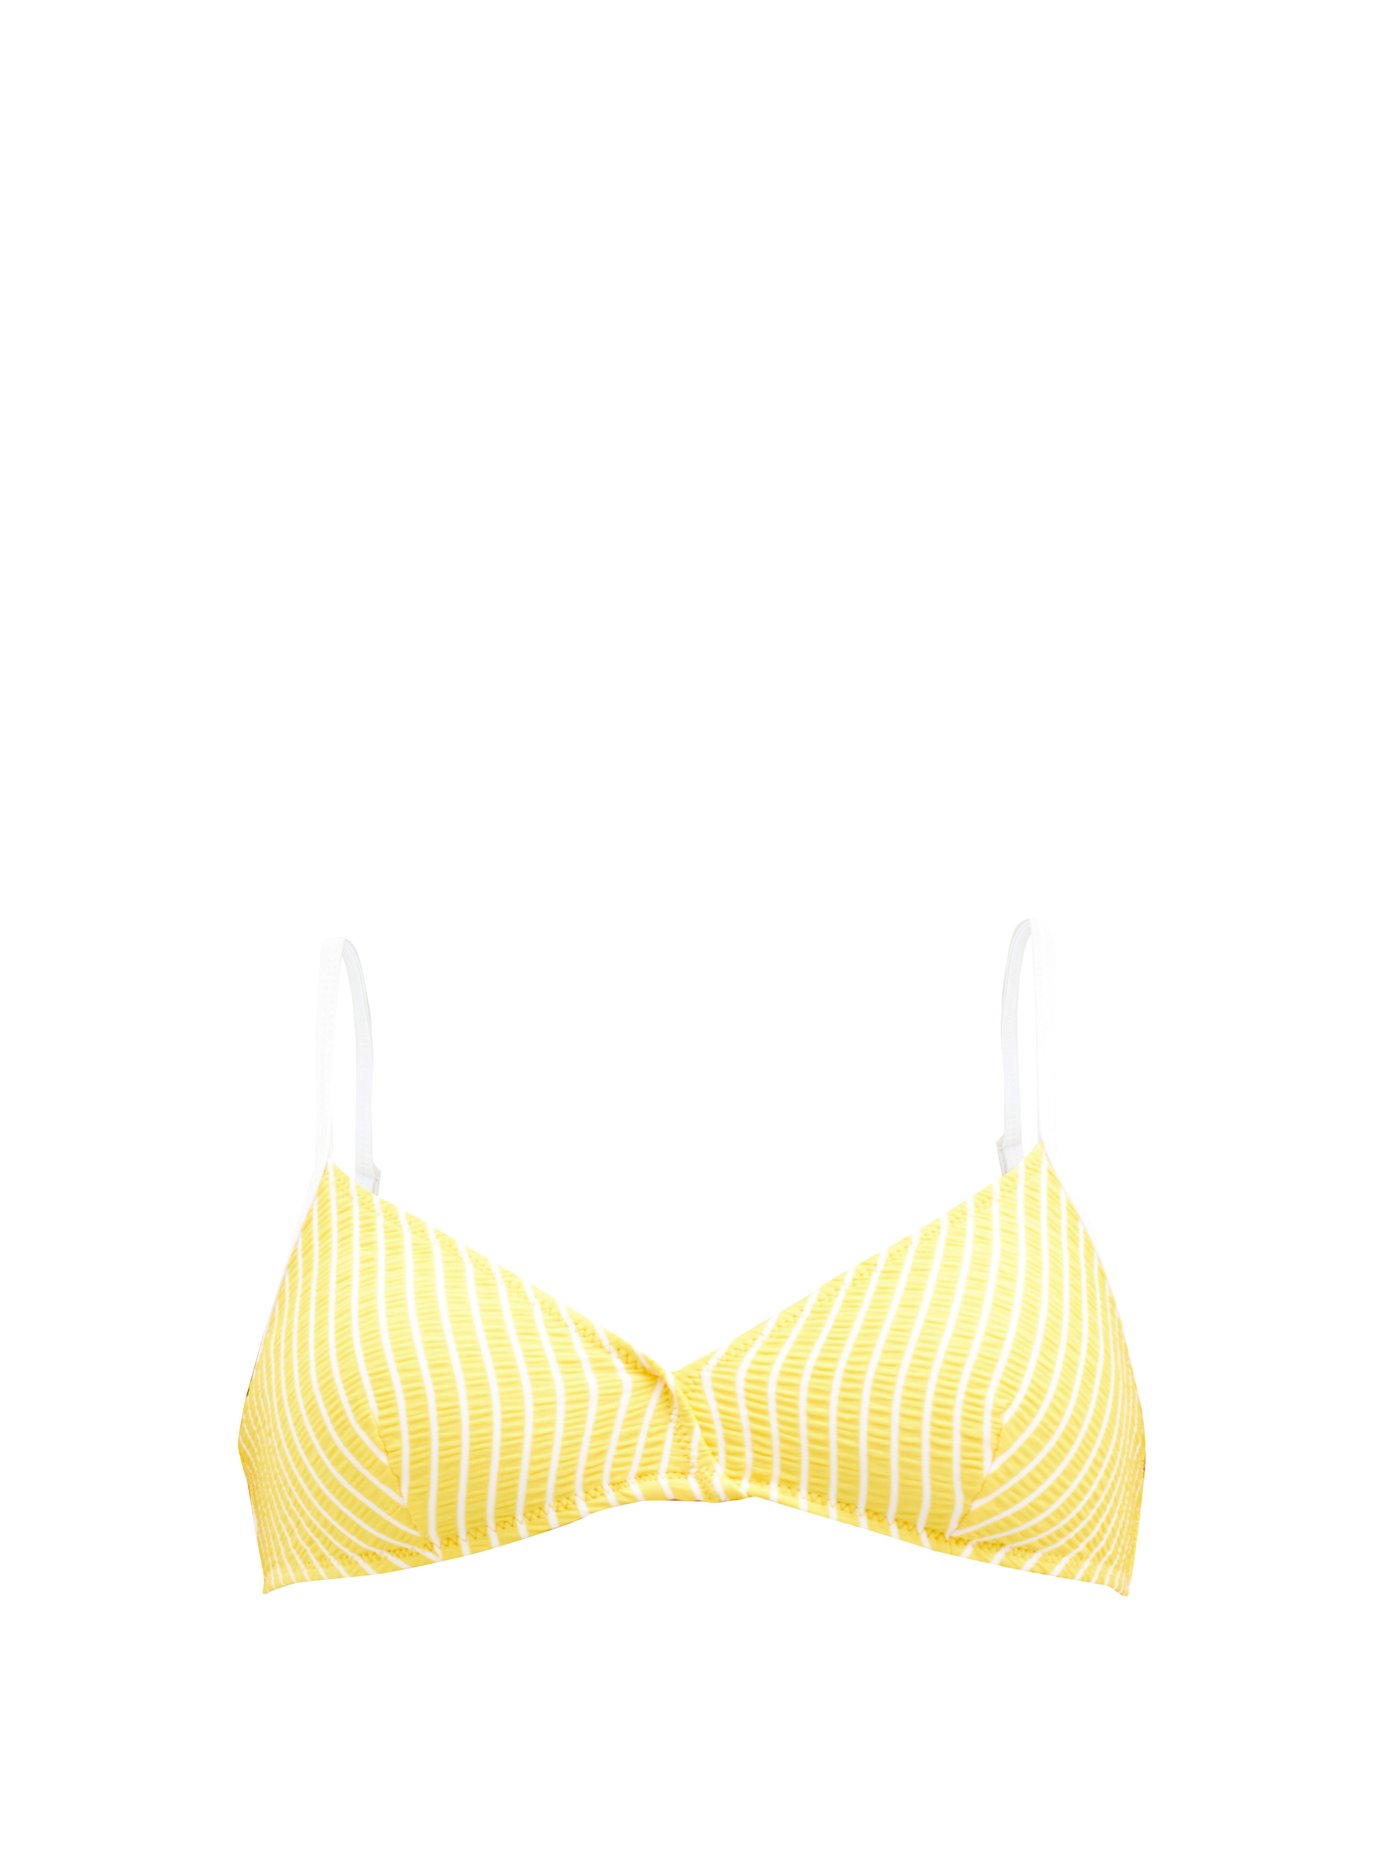 yellow and white striped bikini top